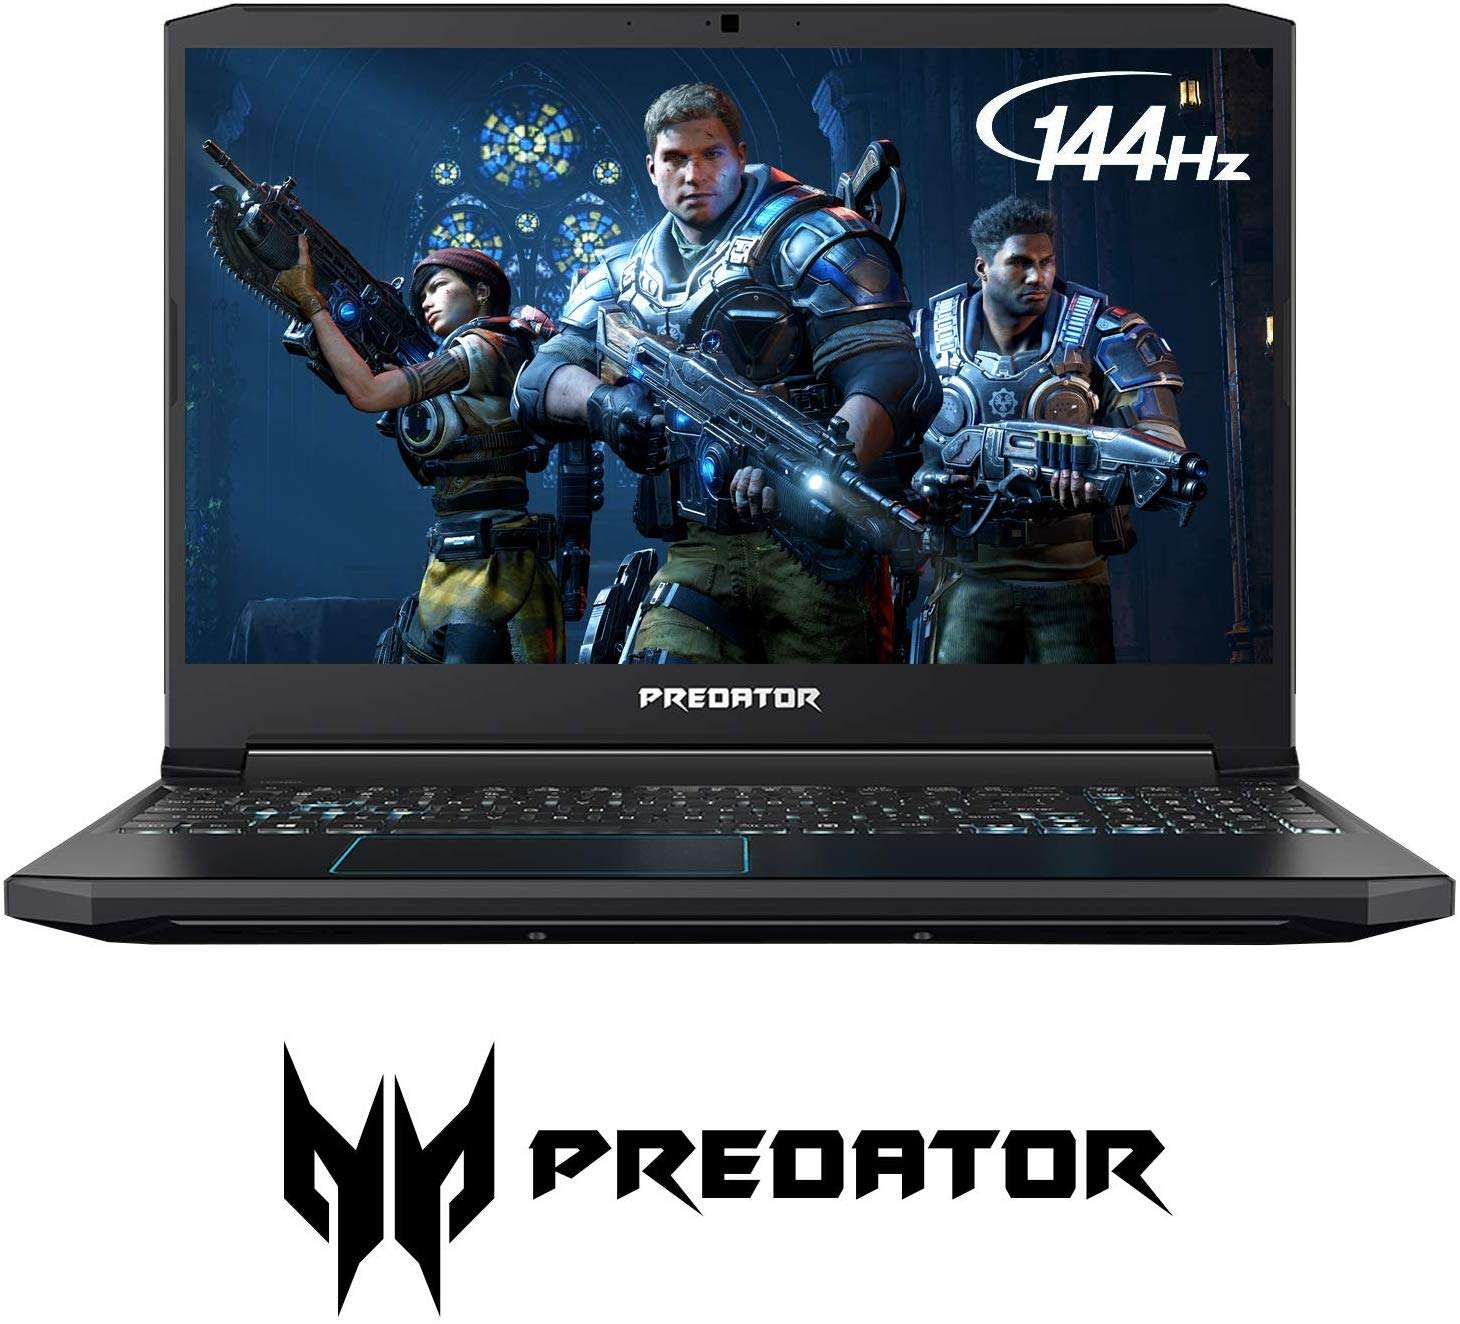 Acer Predator Helios 300 Gaming Laptop PC, 15.6 inches Full HD 144Hz 3ms IPS Display, Intel i7-9750H, GTX 1660 Ti 6GB, 16GB DDR4, 256GB PCIe NVMe SSD, Backlit Keyboard, PH315-52-78VL